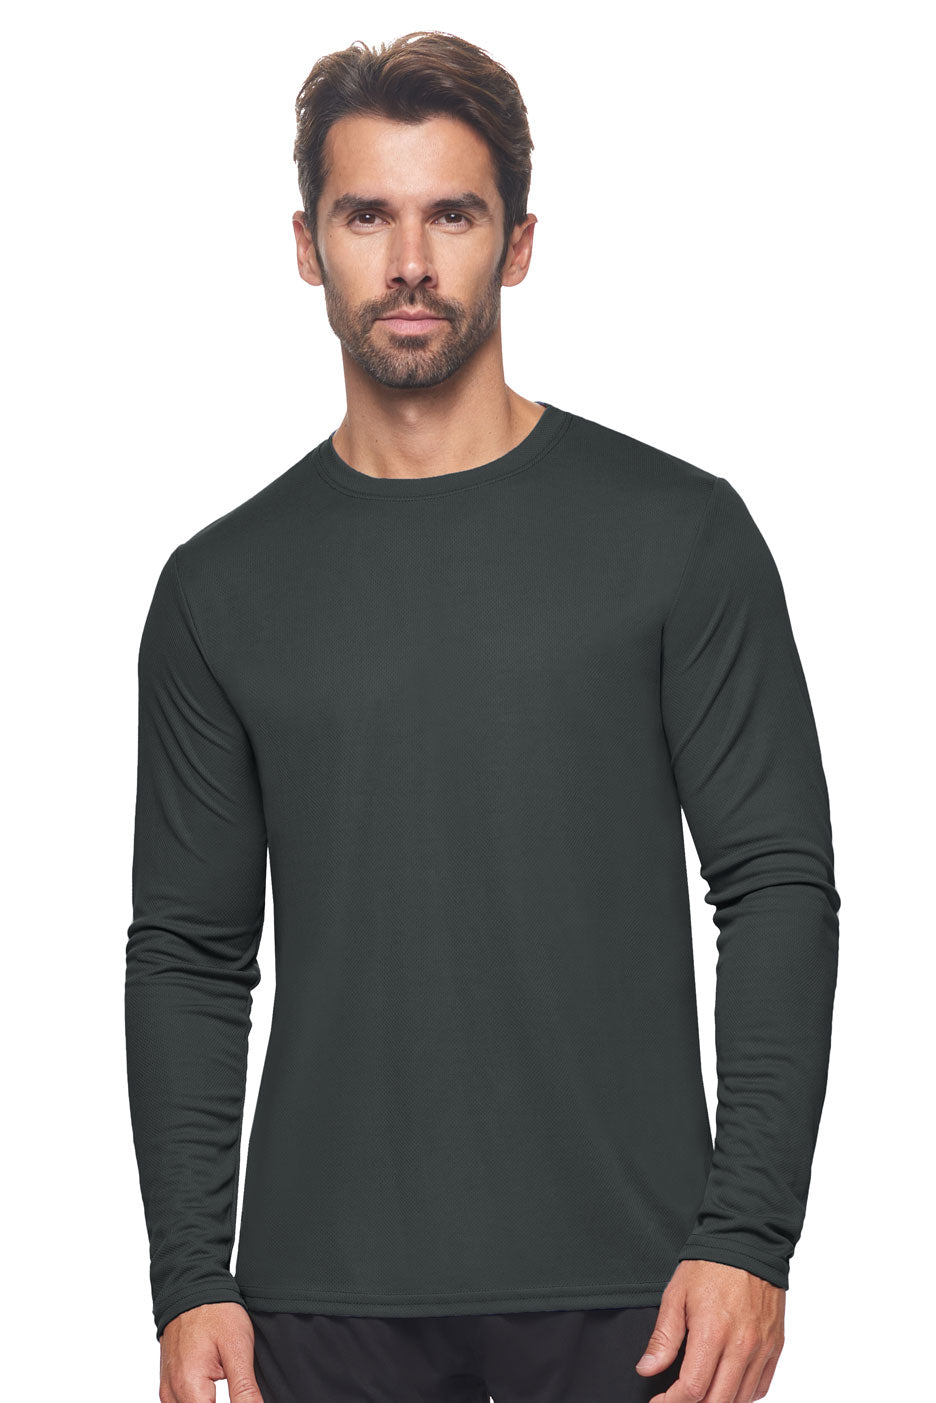 Men's Men's Long Sleeve Import Tech T-Shirt